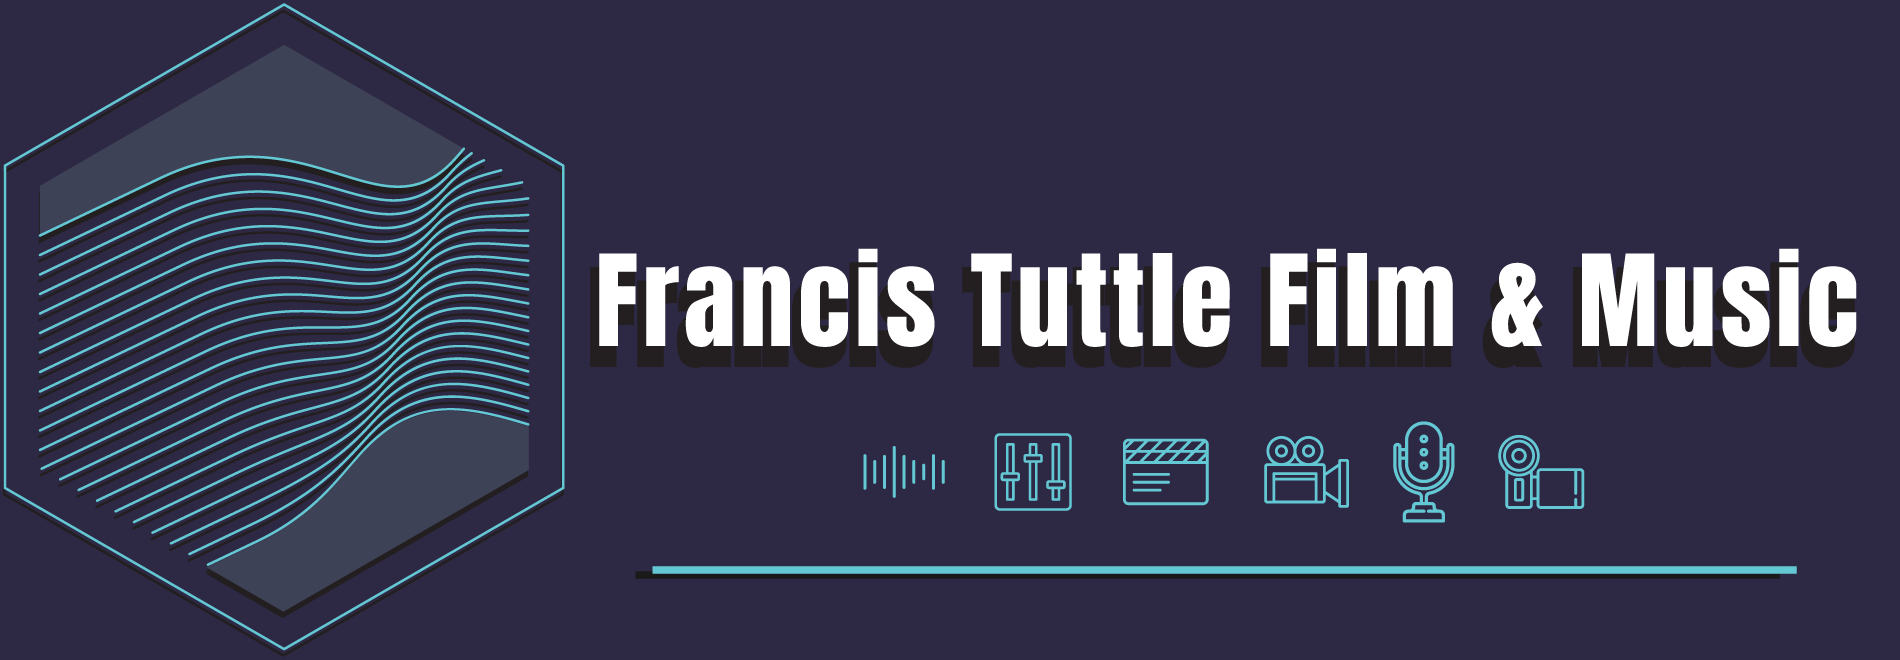 Francis Tuttle Film & Music